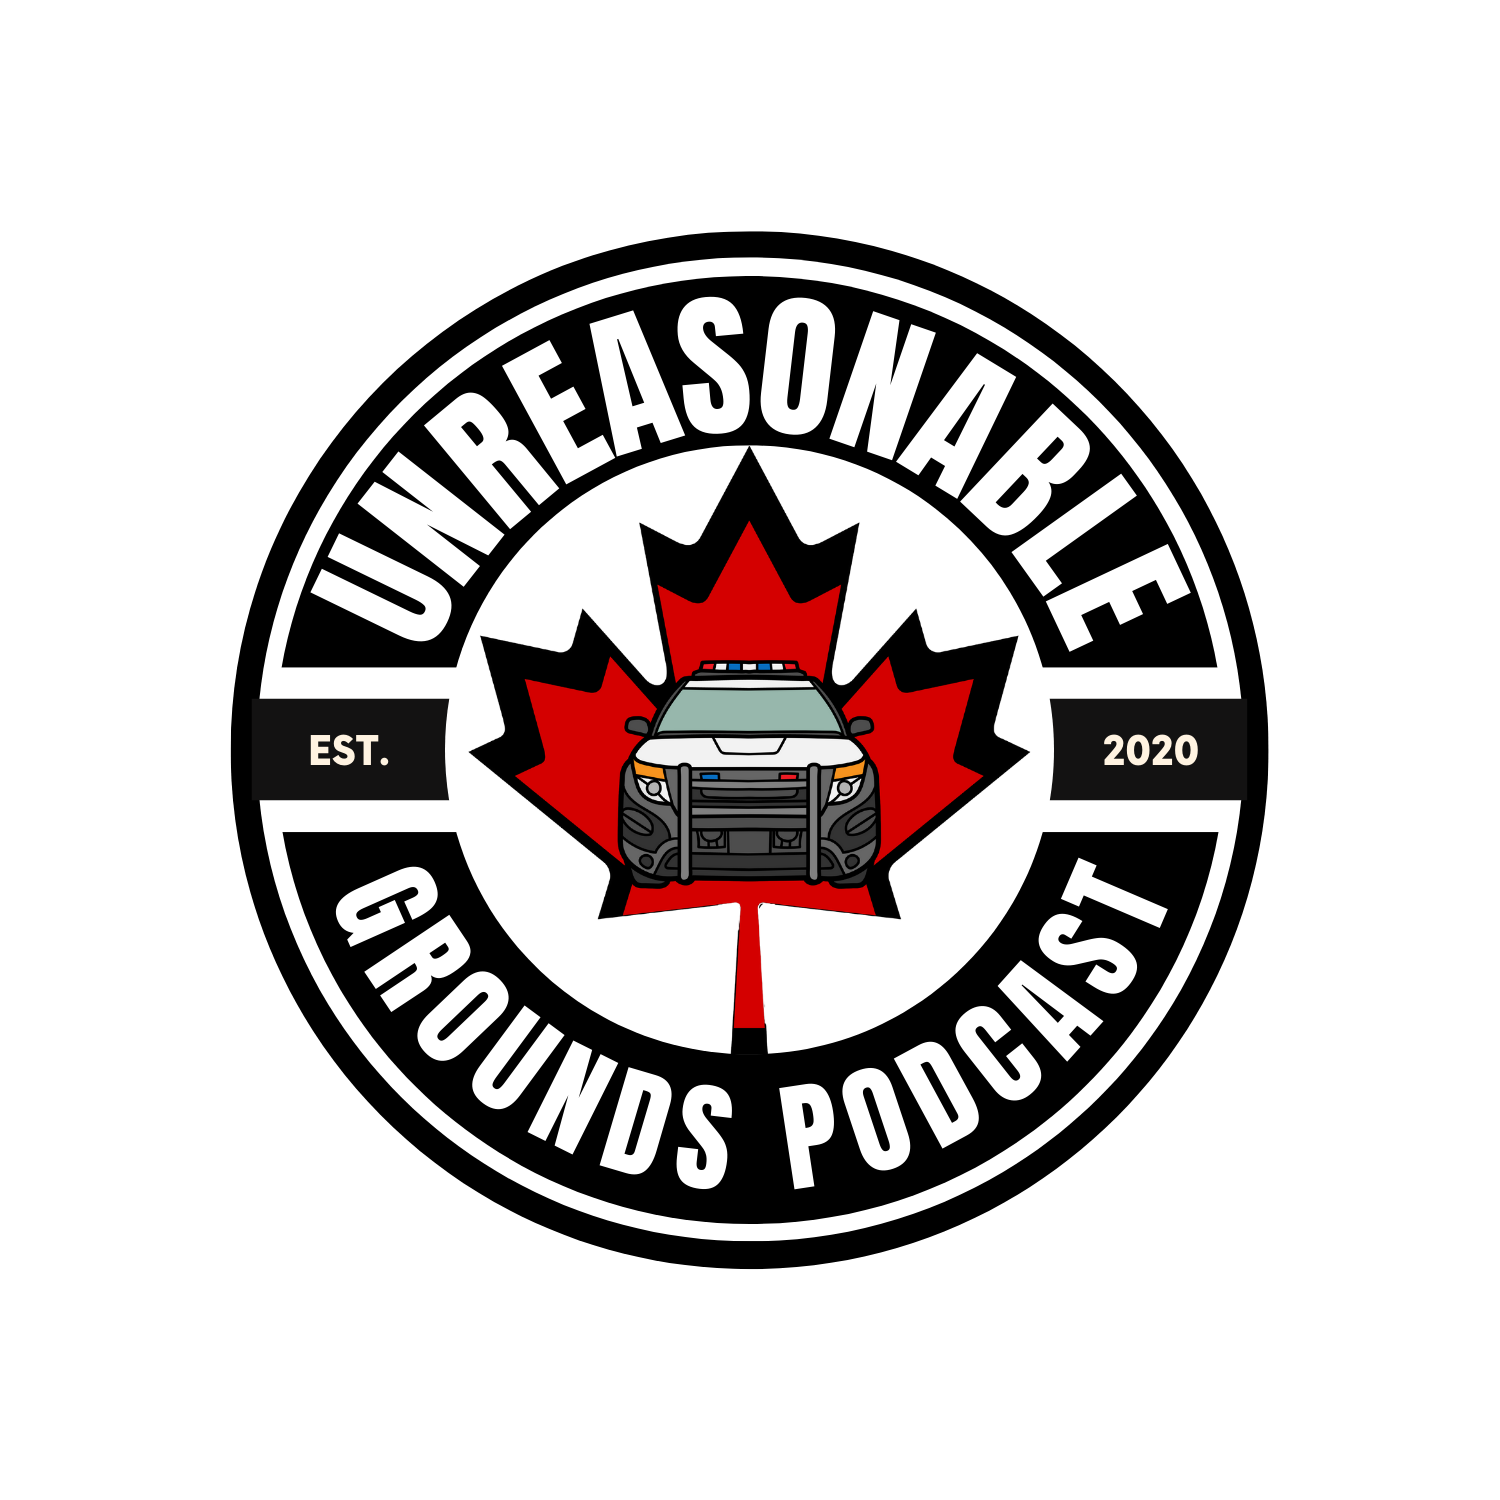 The Unreasonable Grounds Podcast 